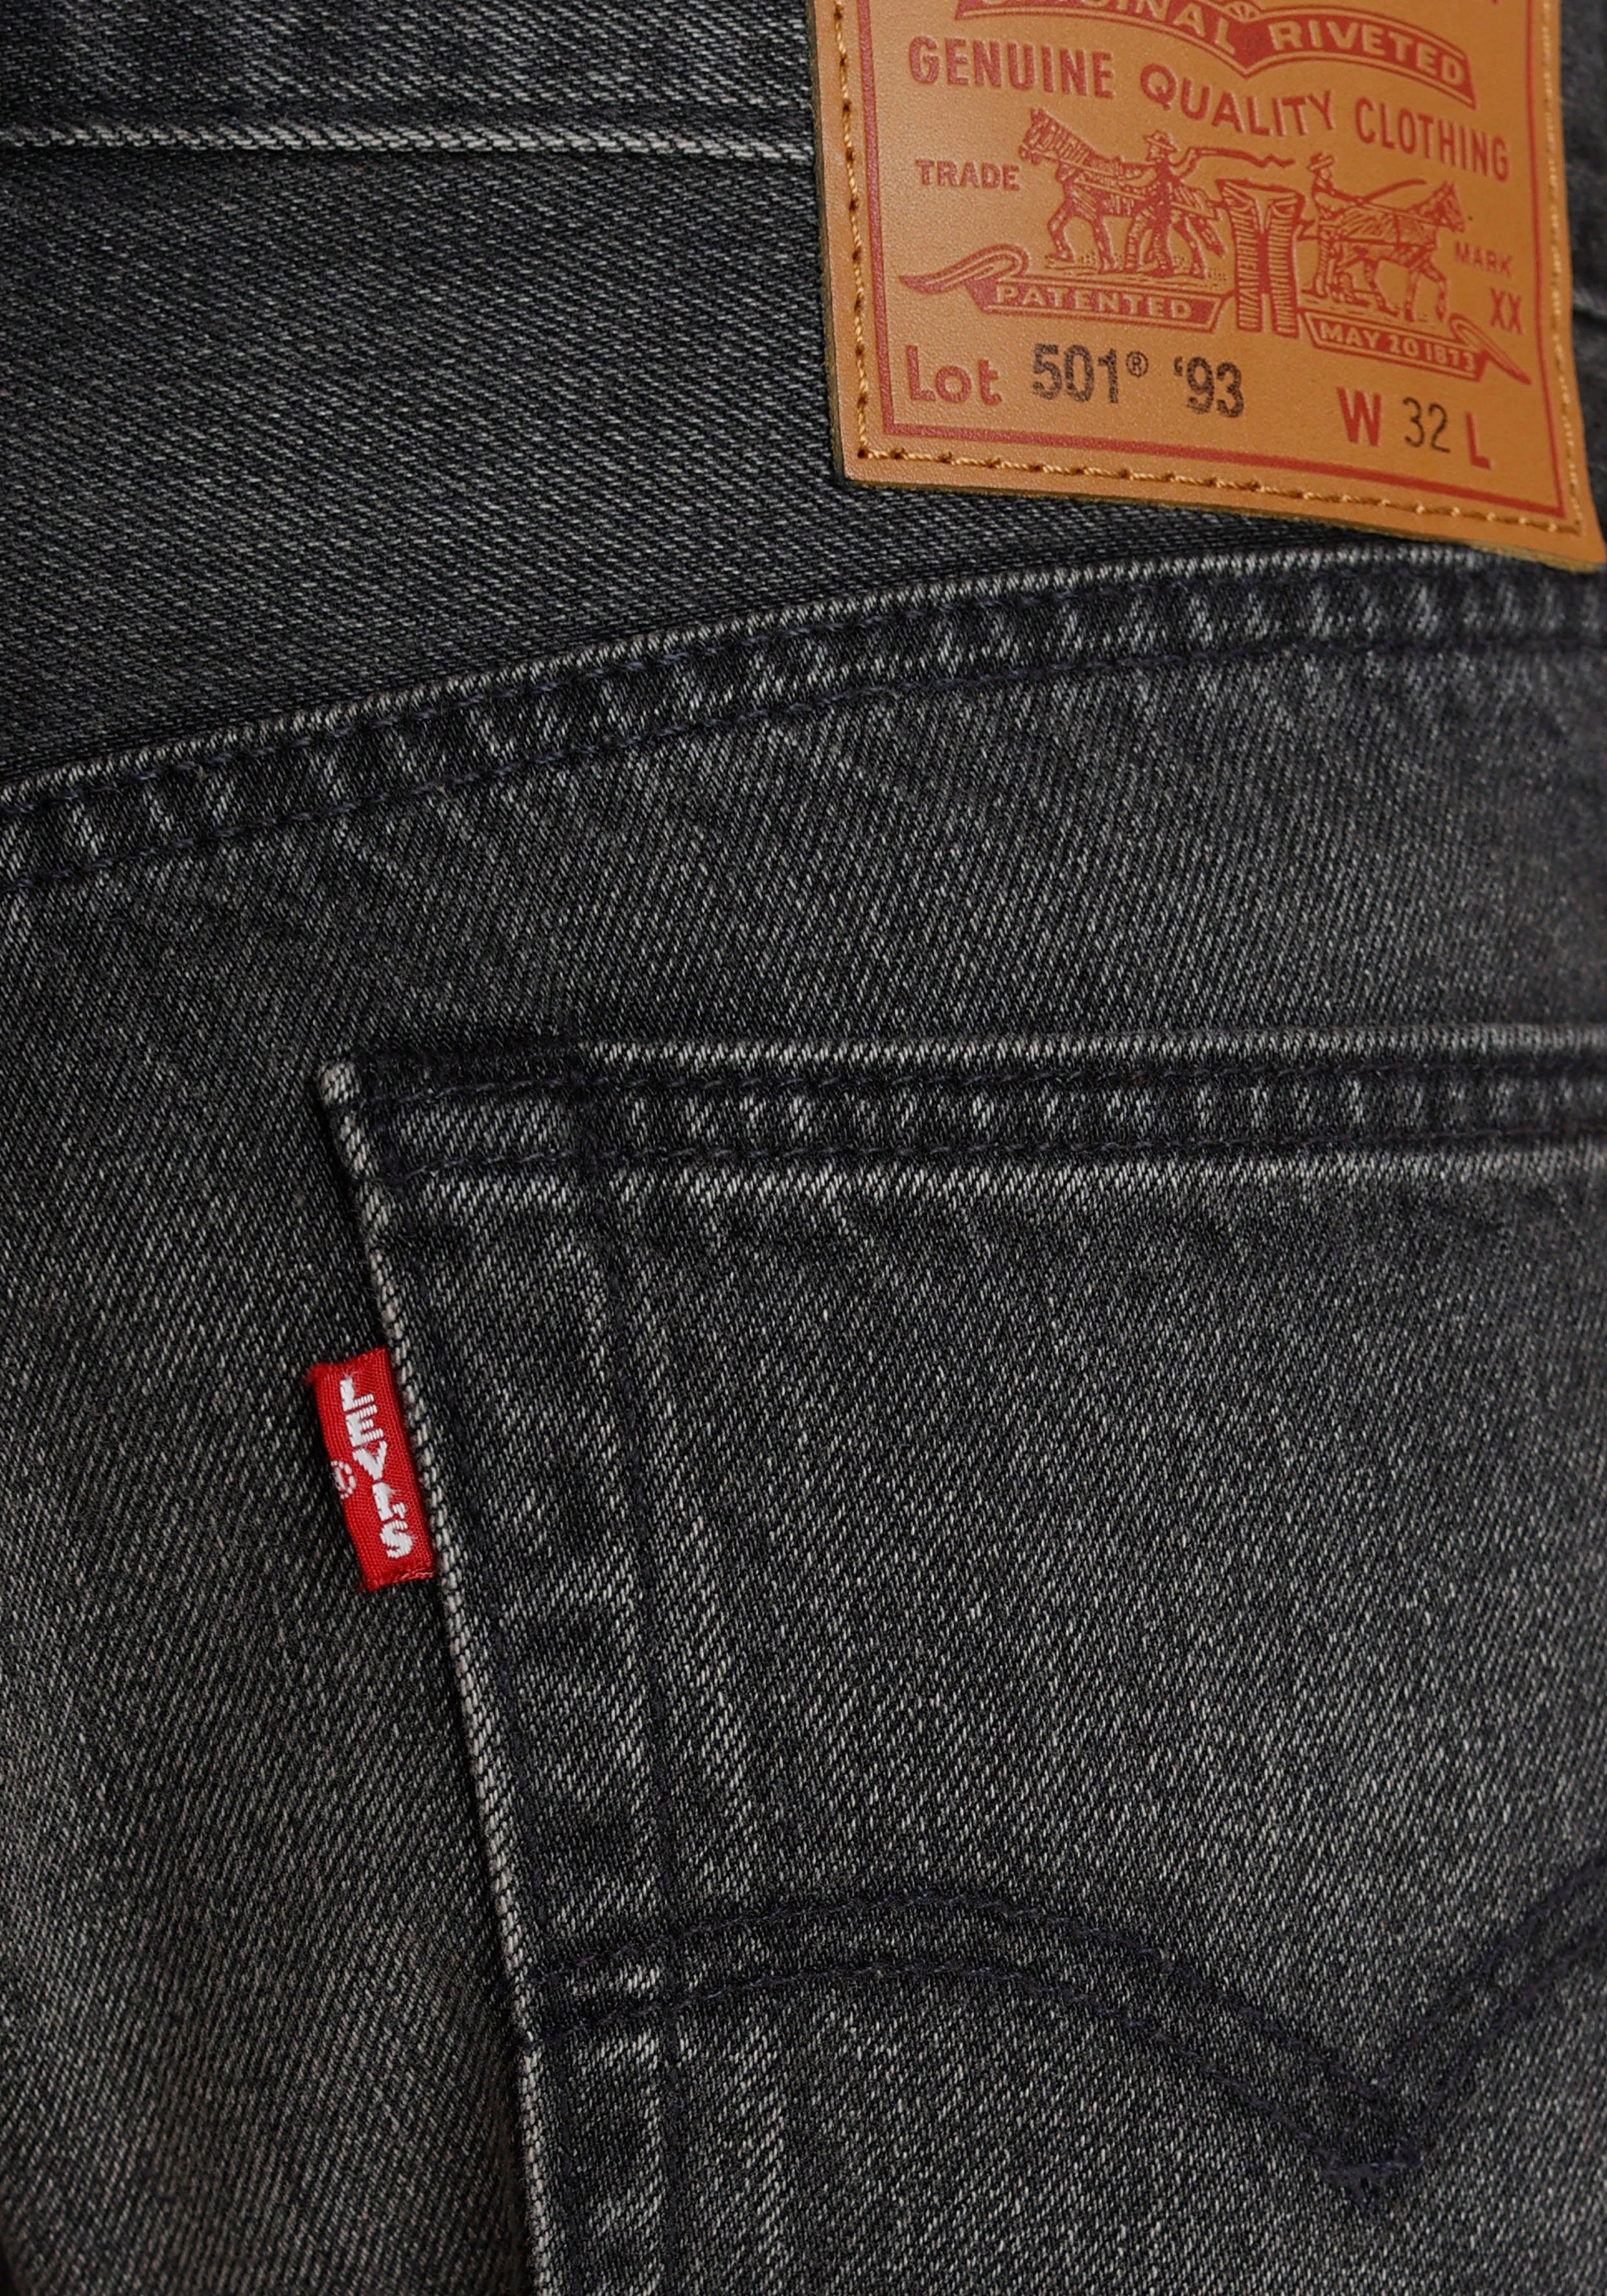 worn 501 Levi's® black Jeansshorts '93